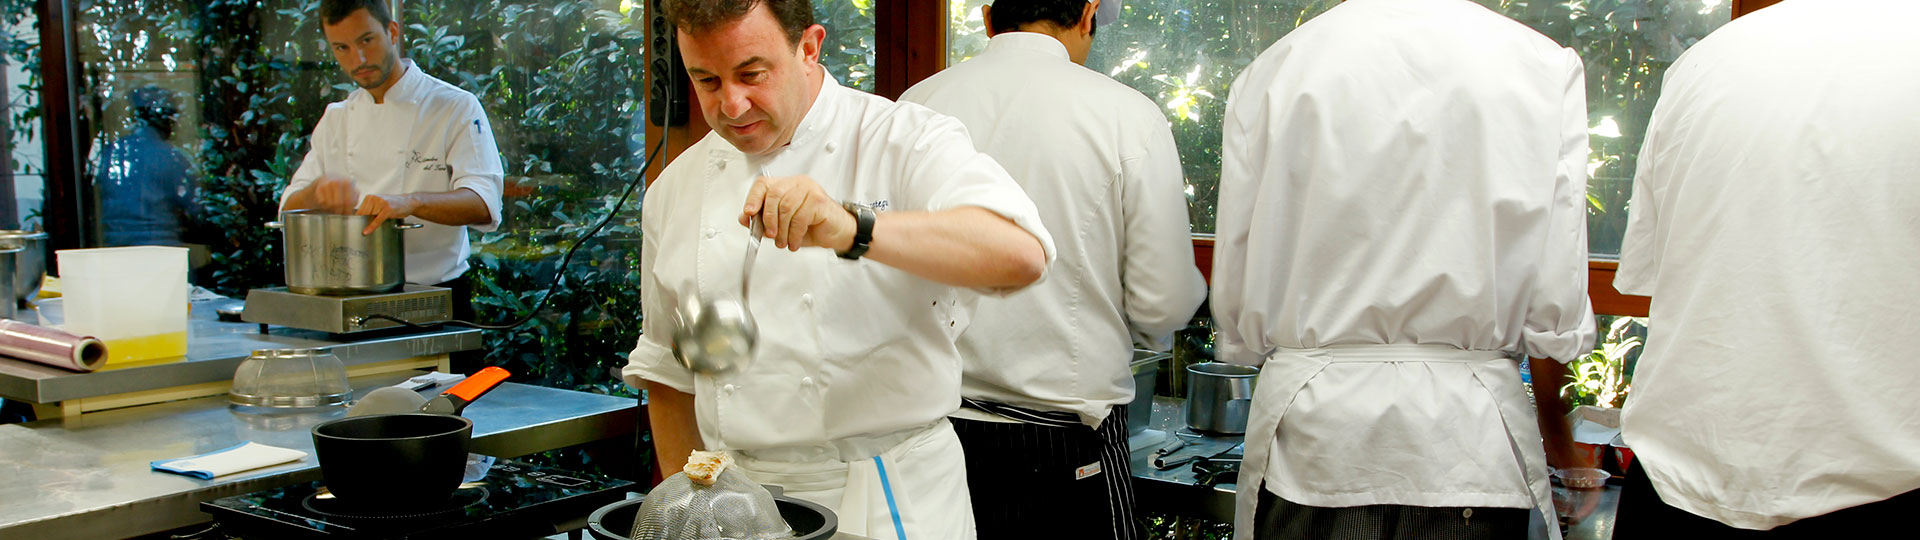 De Spaanse chef-kok Martín Berasategui kookt